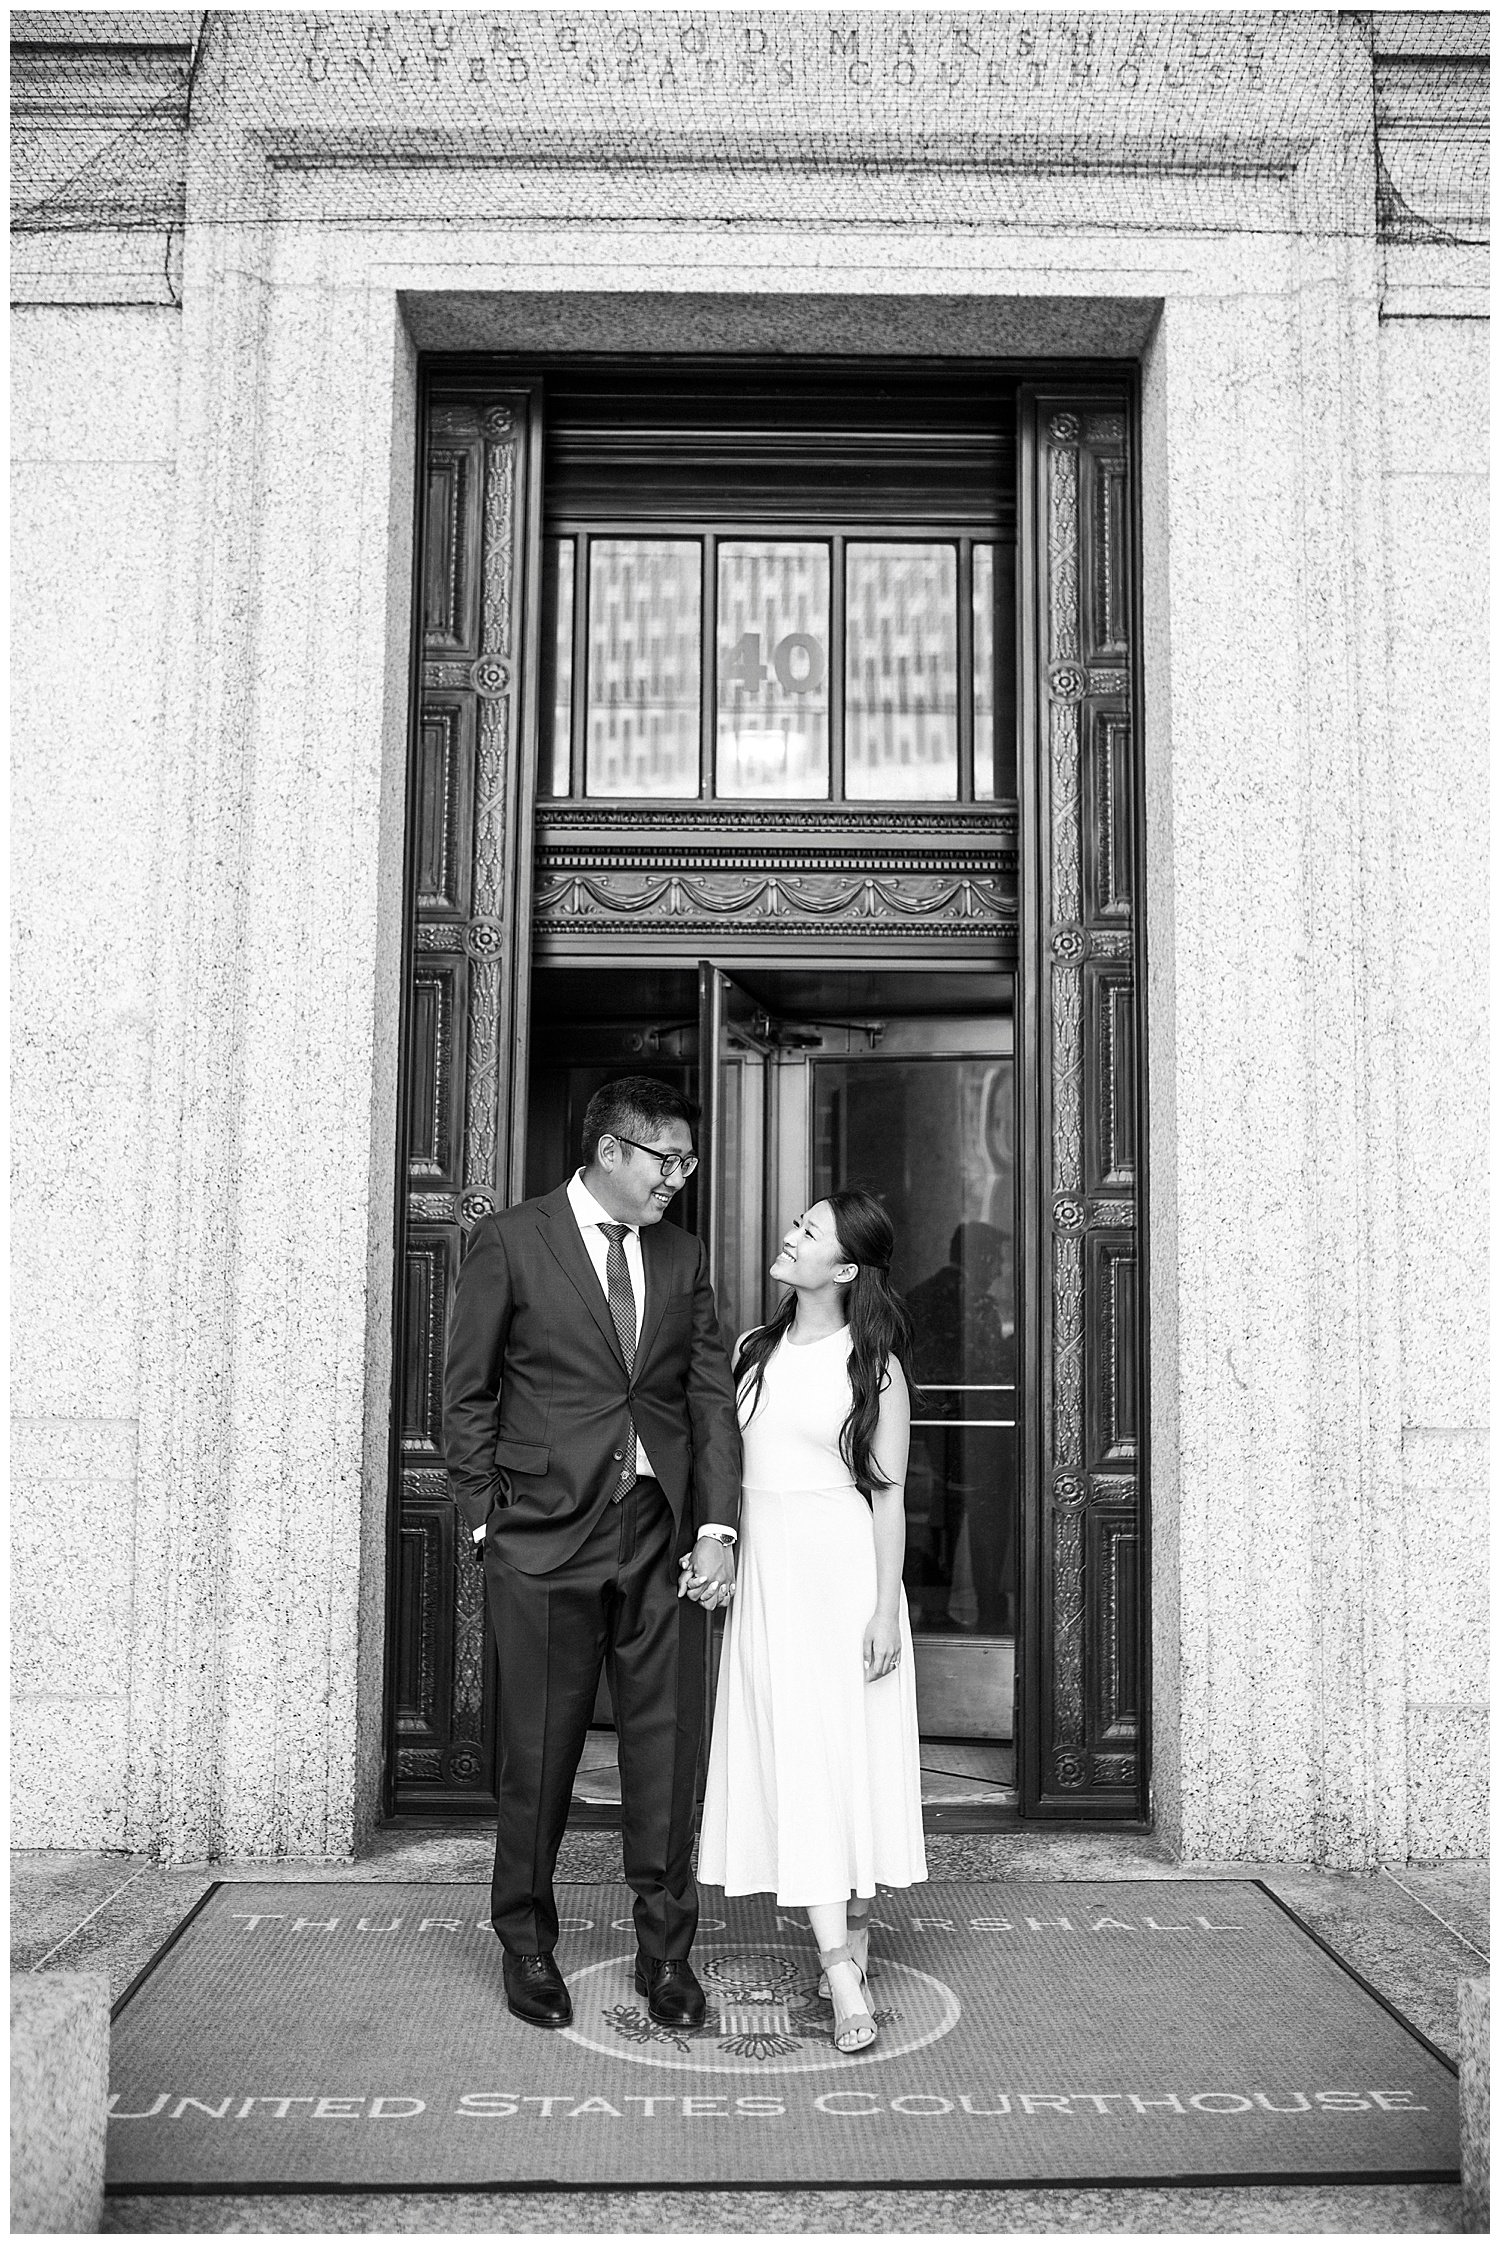 NYC-Marriage-Bureau-Elopement-Wedding-at-City-Hall-Apollo-Fields-17.jpg